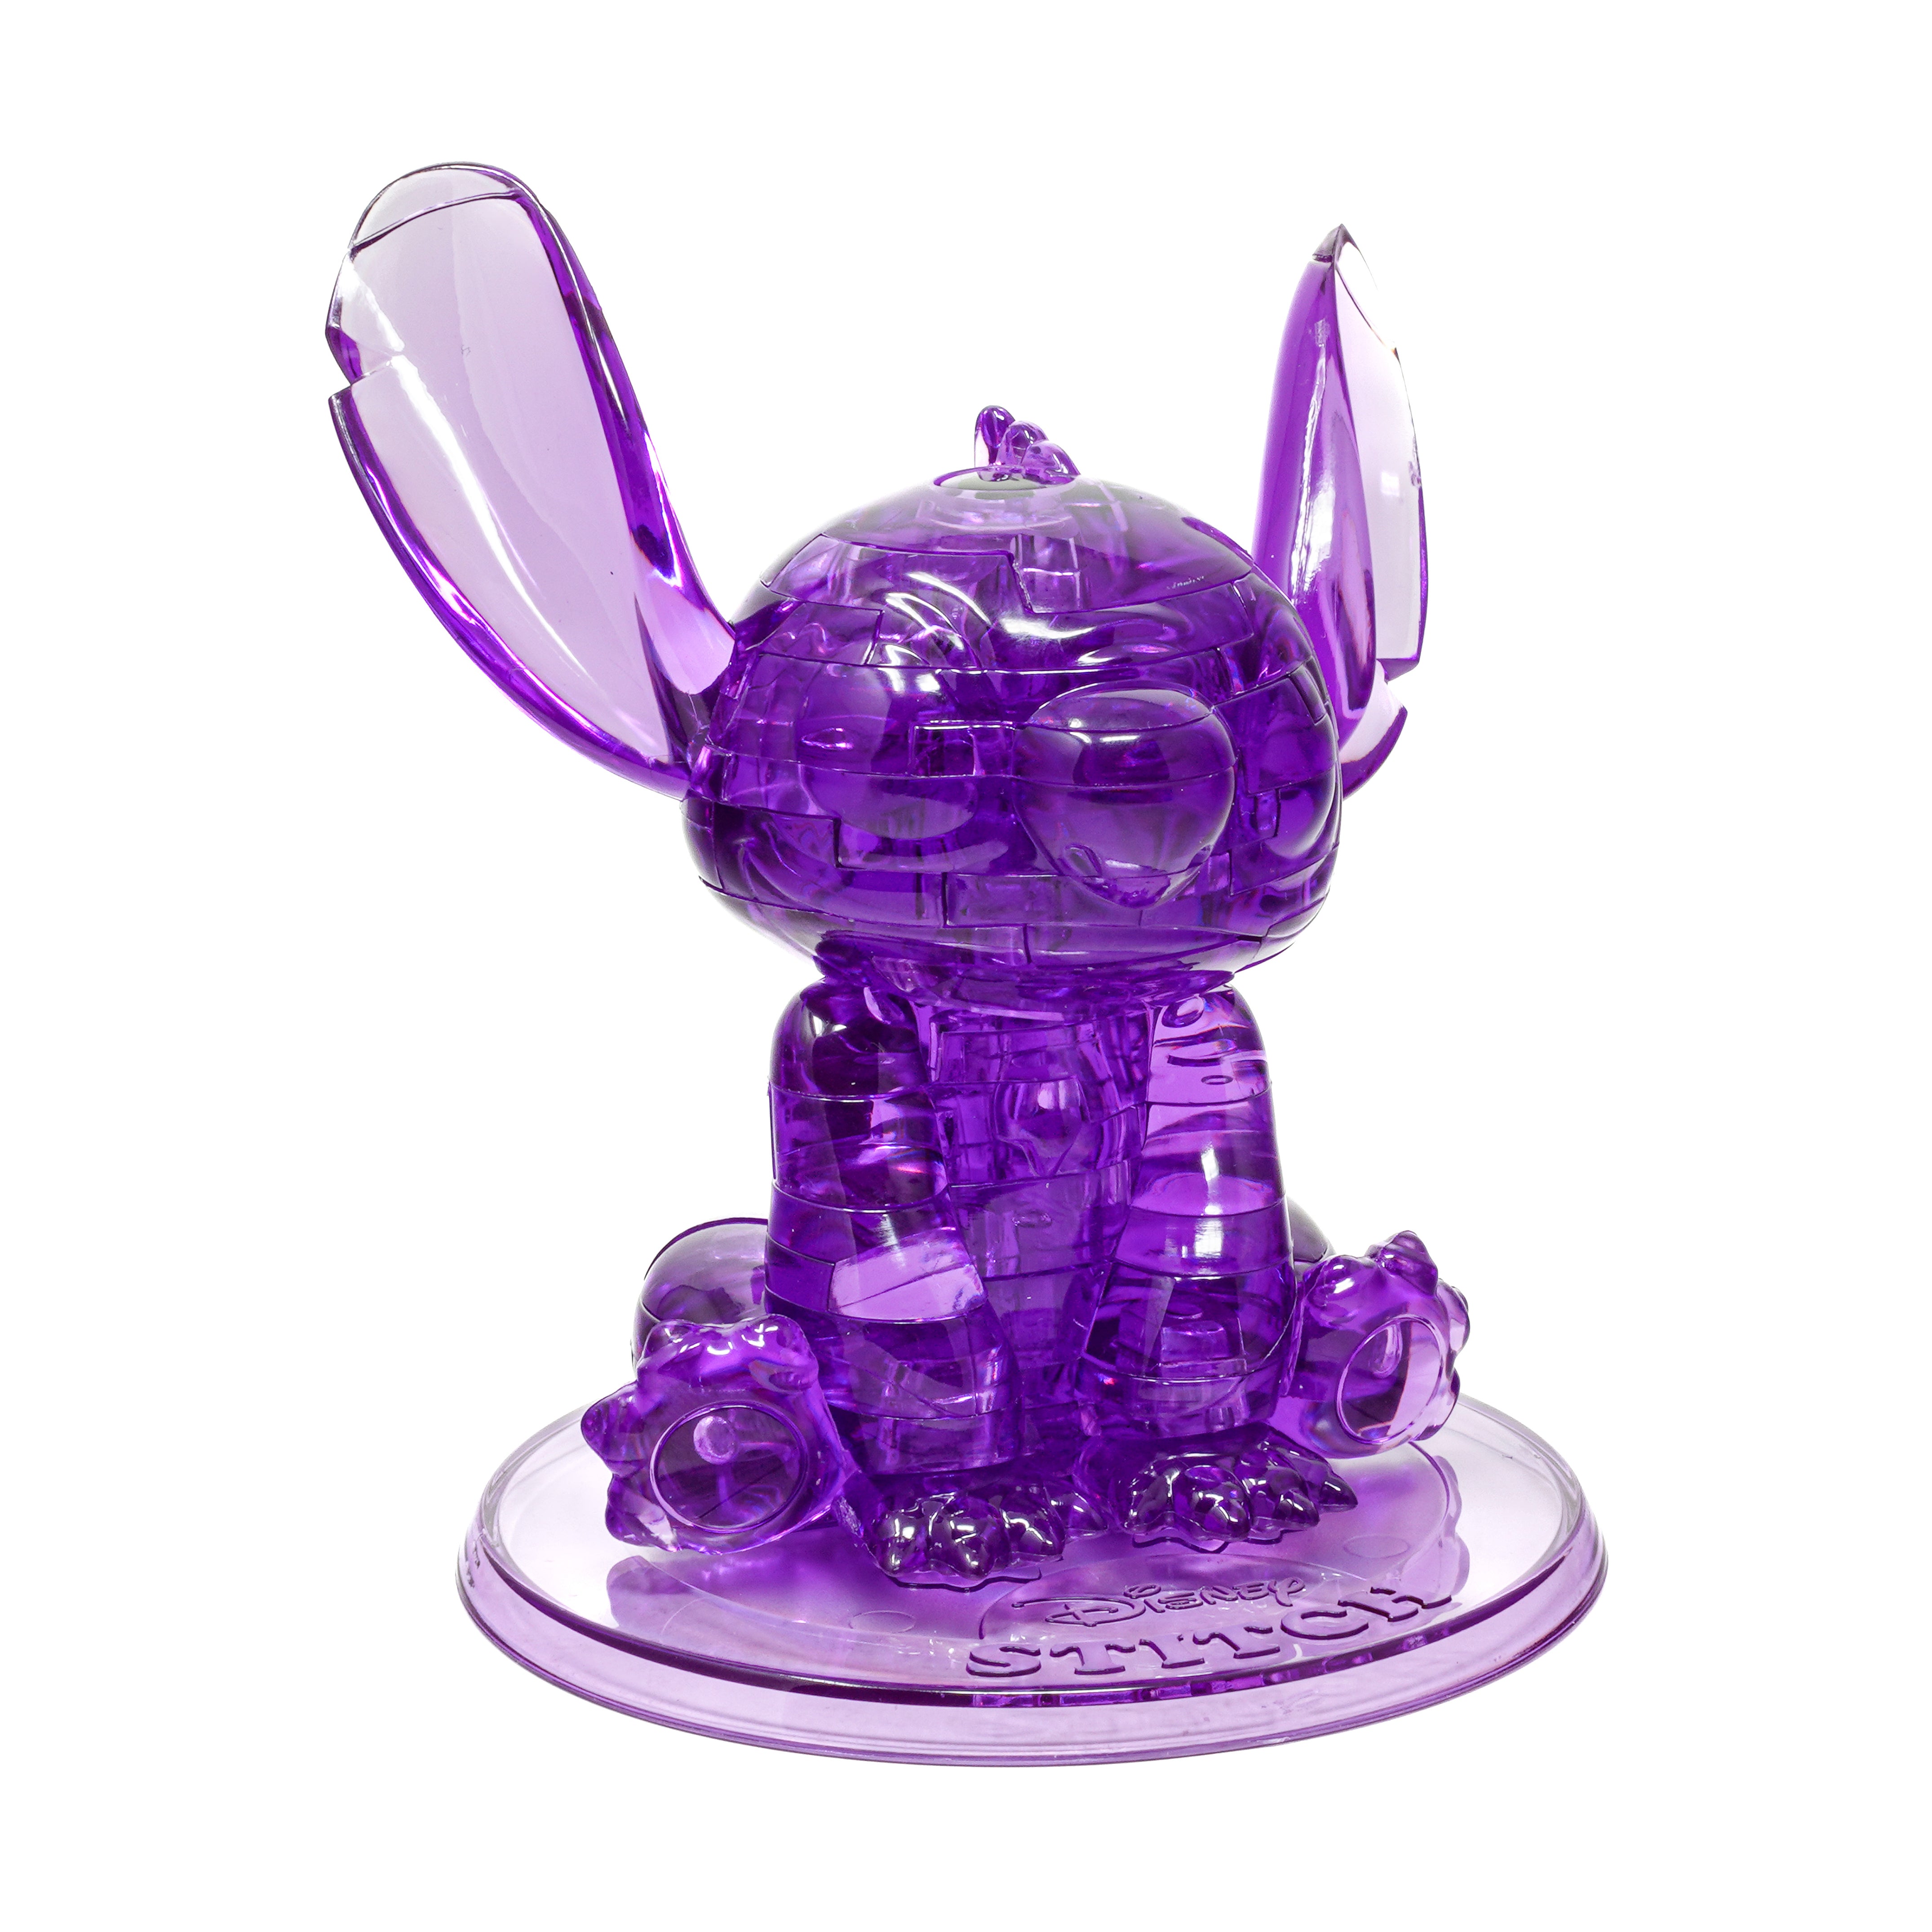 HANAYAMA Clear Stitch Crystal Gallery 43 Piece Disney 3D Puzzle / Hard to  get